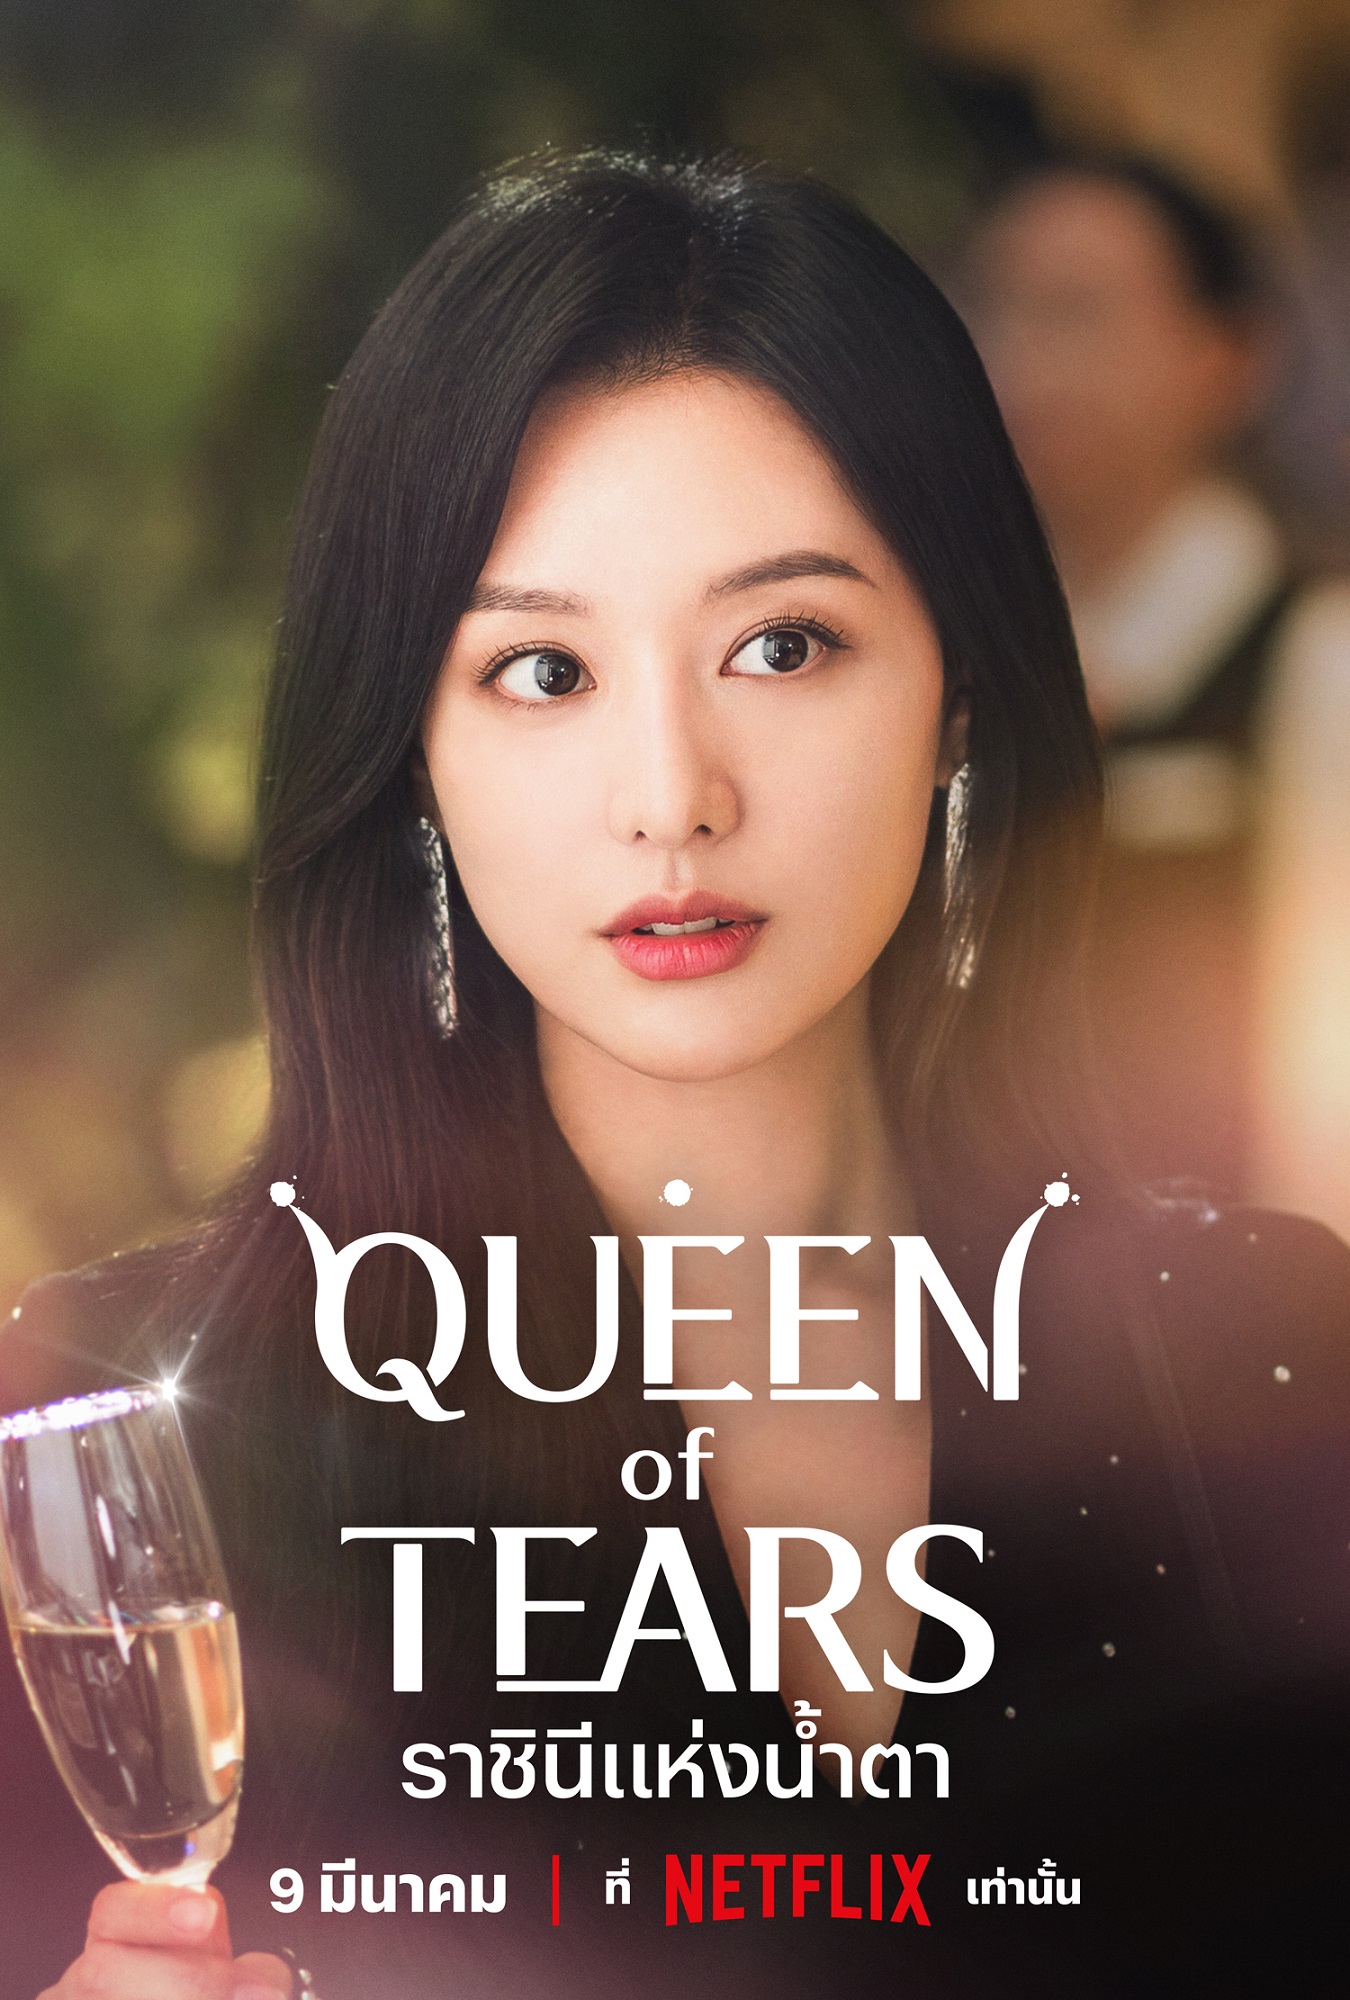 queen of tears ราชินีแห่งน้ำตา